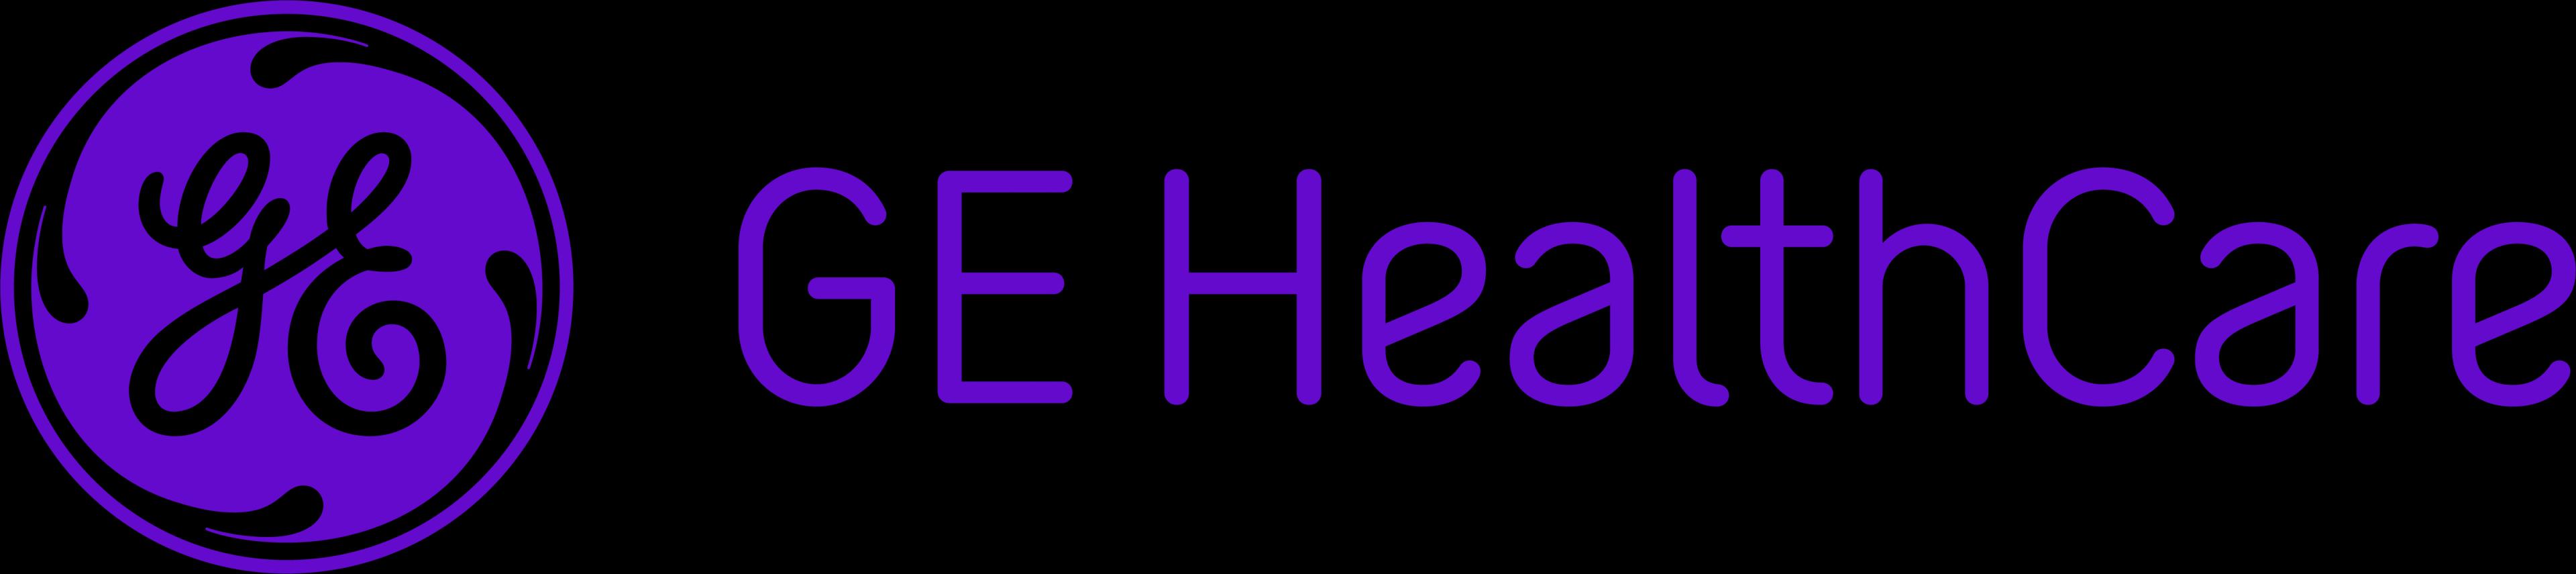 GE Healthcare_logo